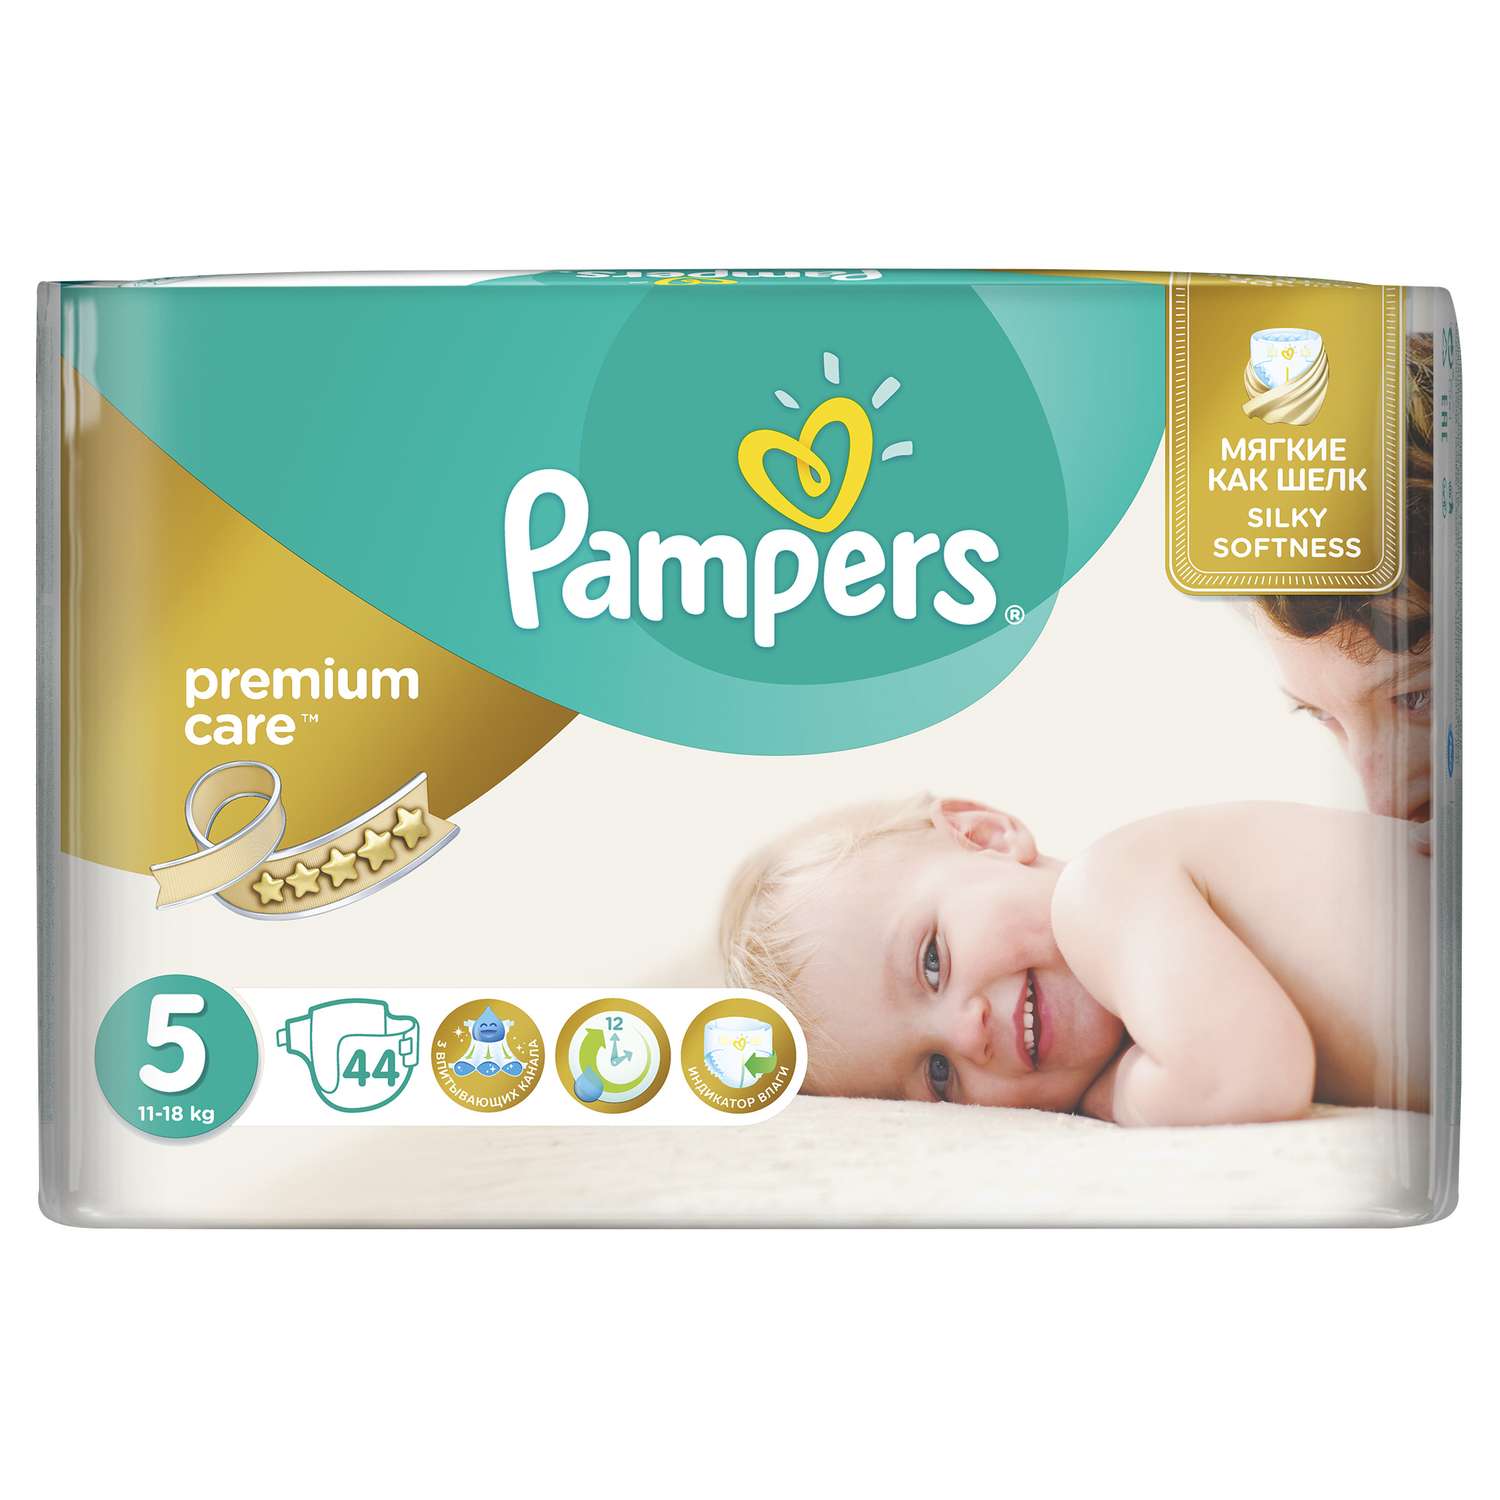 Подгузники Pampers Premium Care 11-18кг 44шт - фото 2